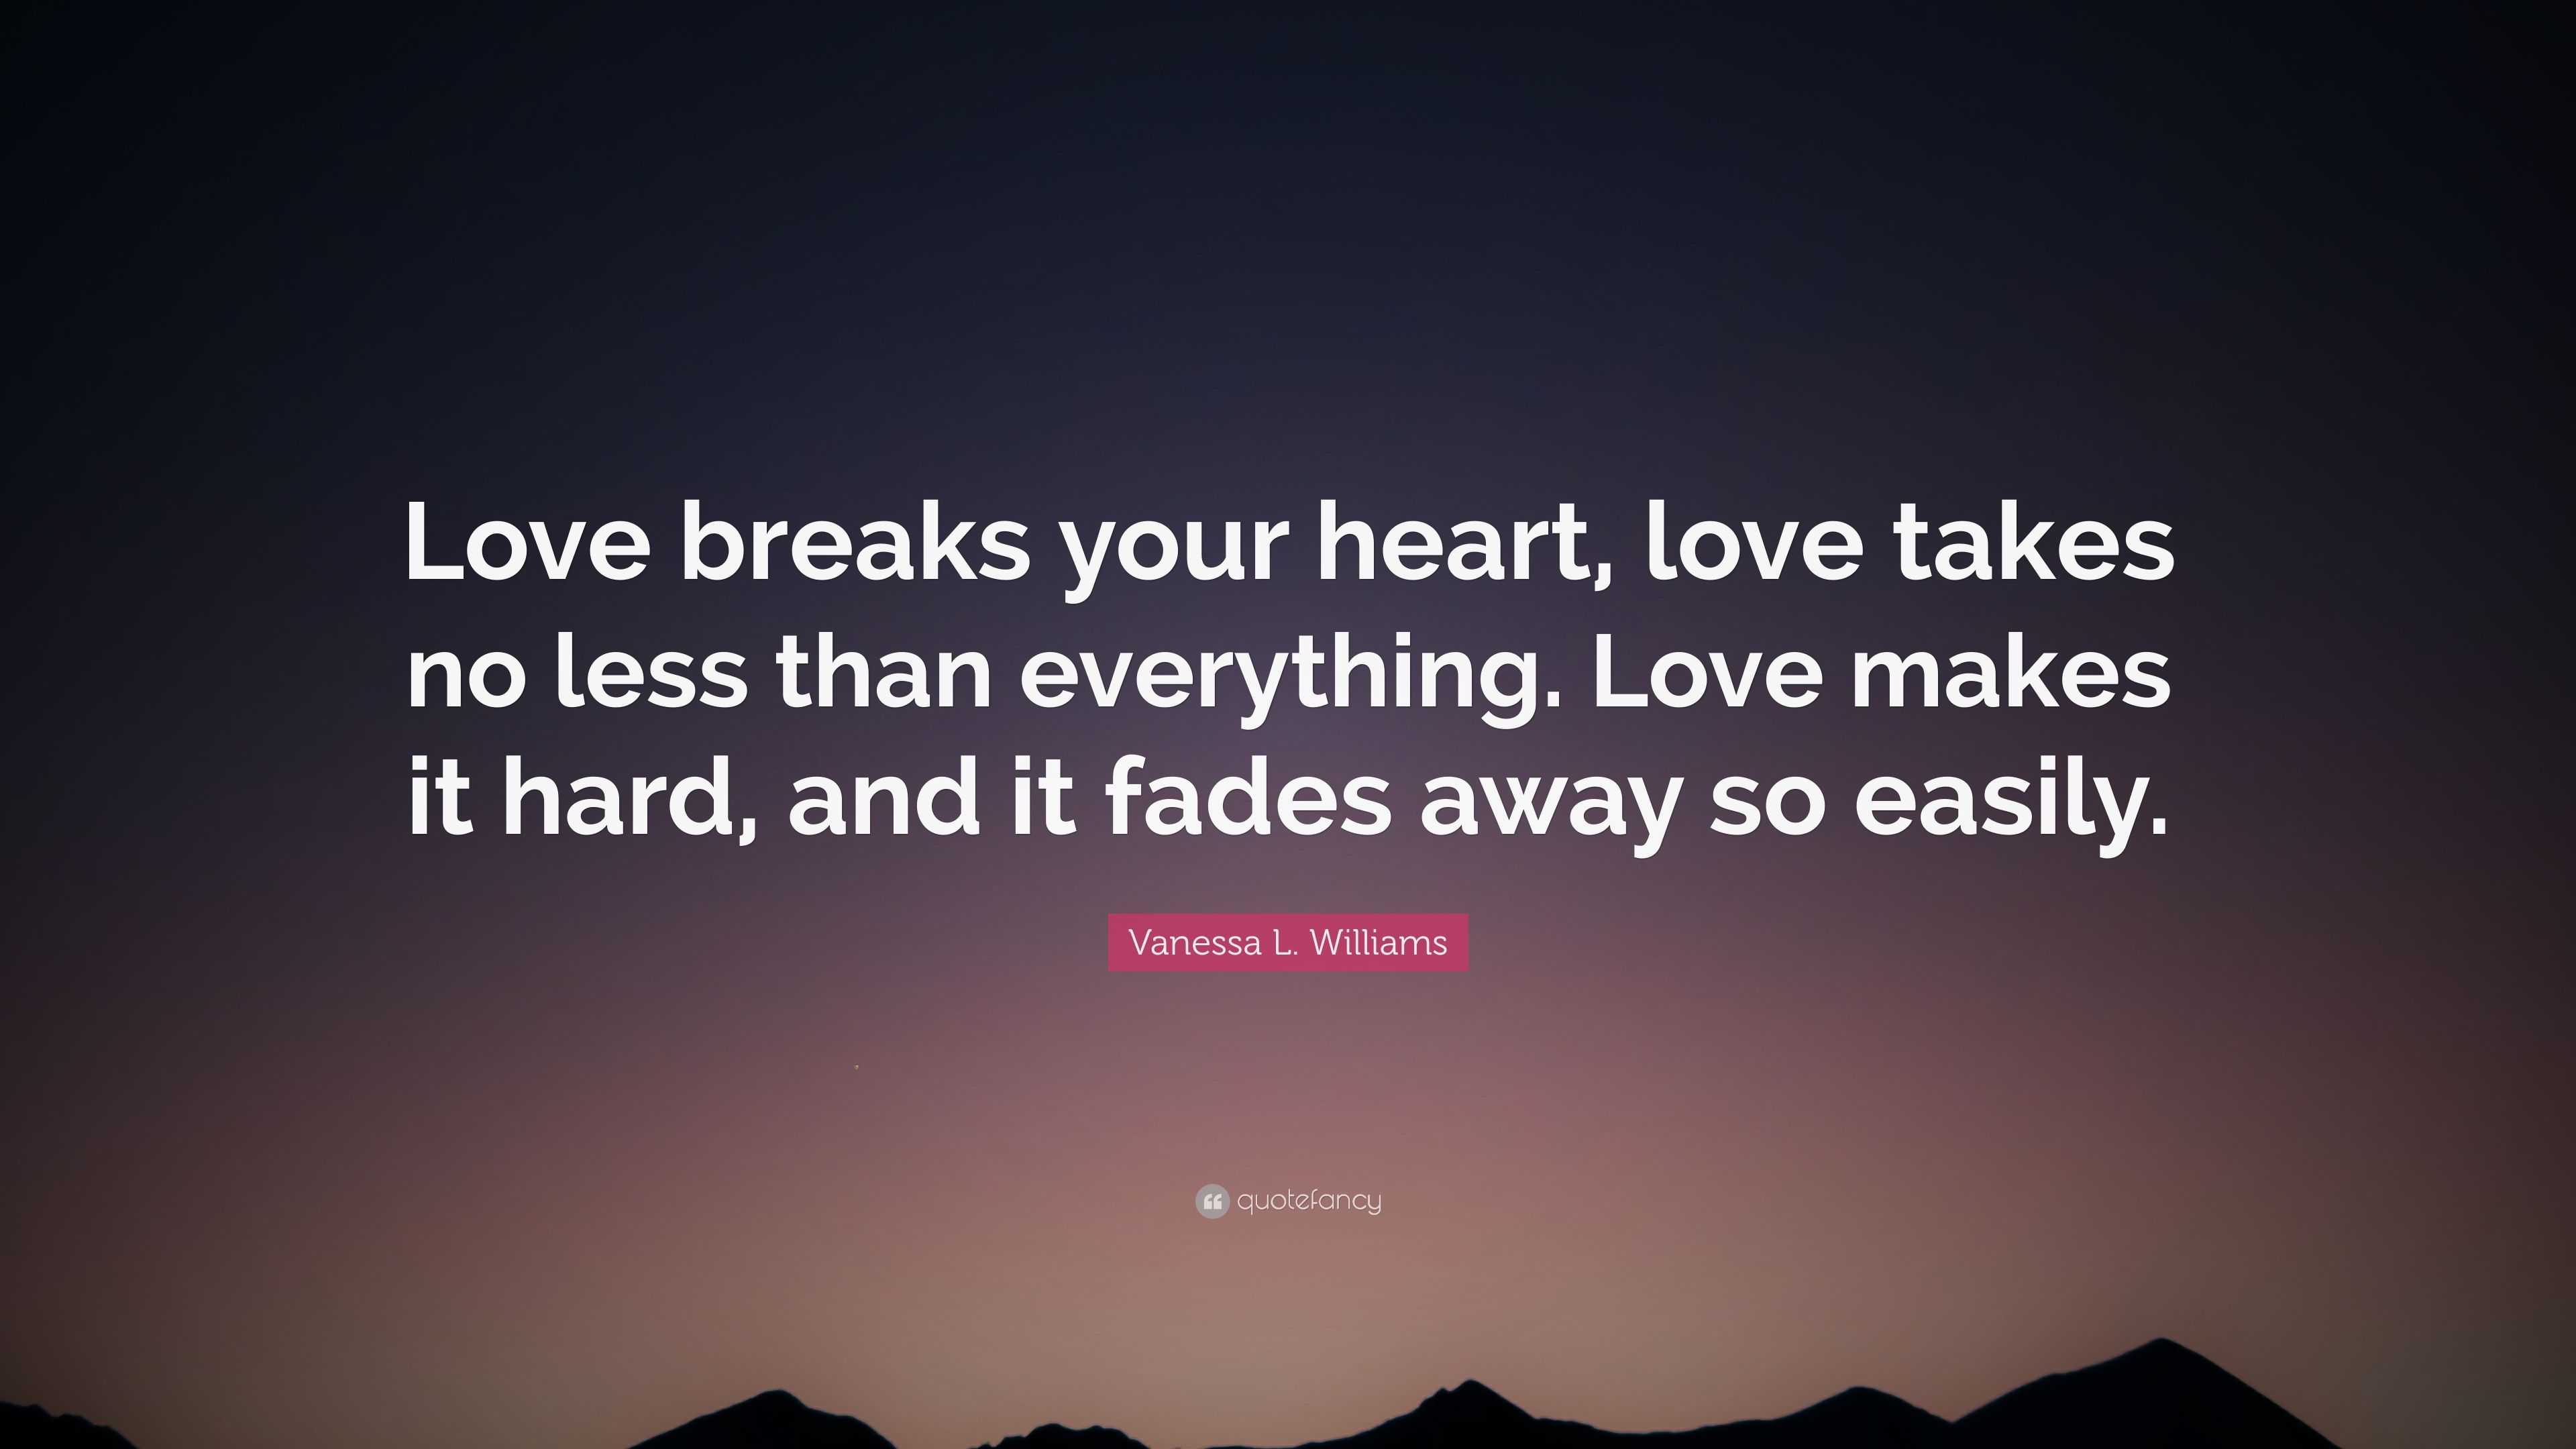 Vanessa L Williams Quote “Love breaks your heart love takes no less